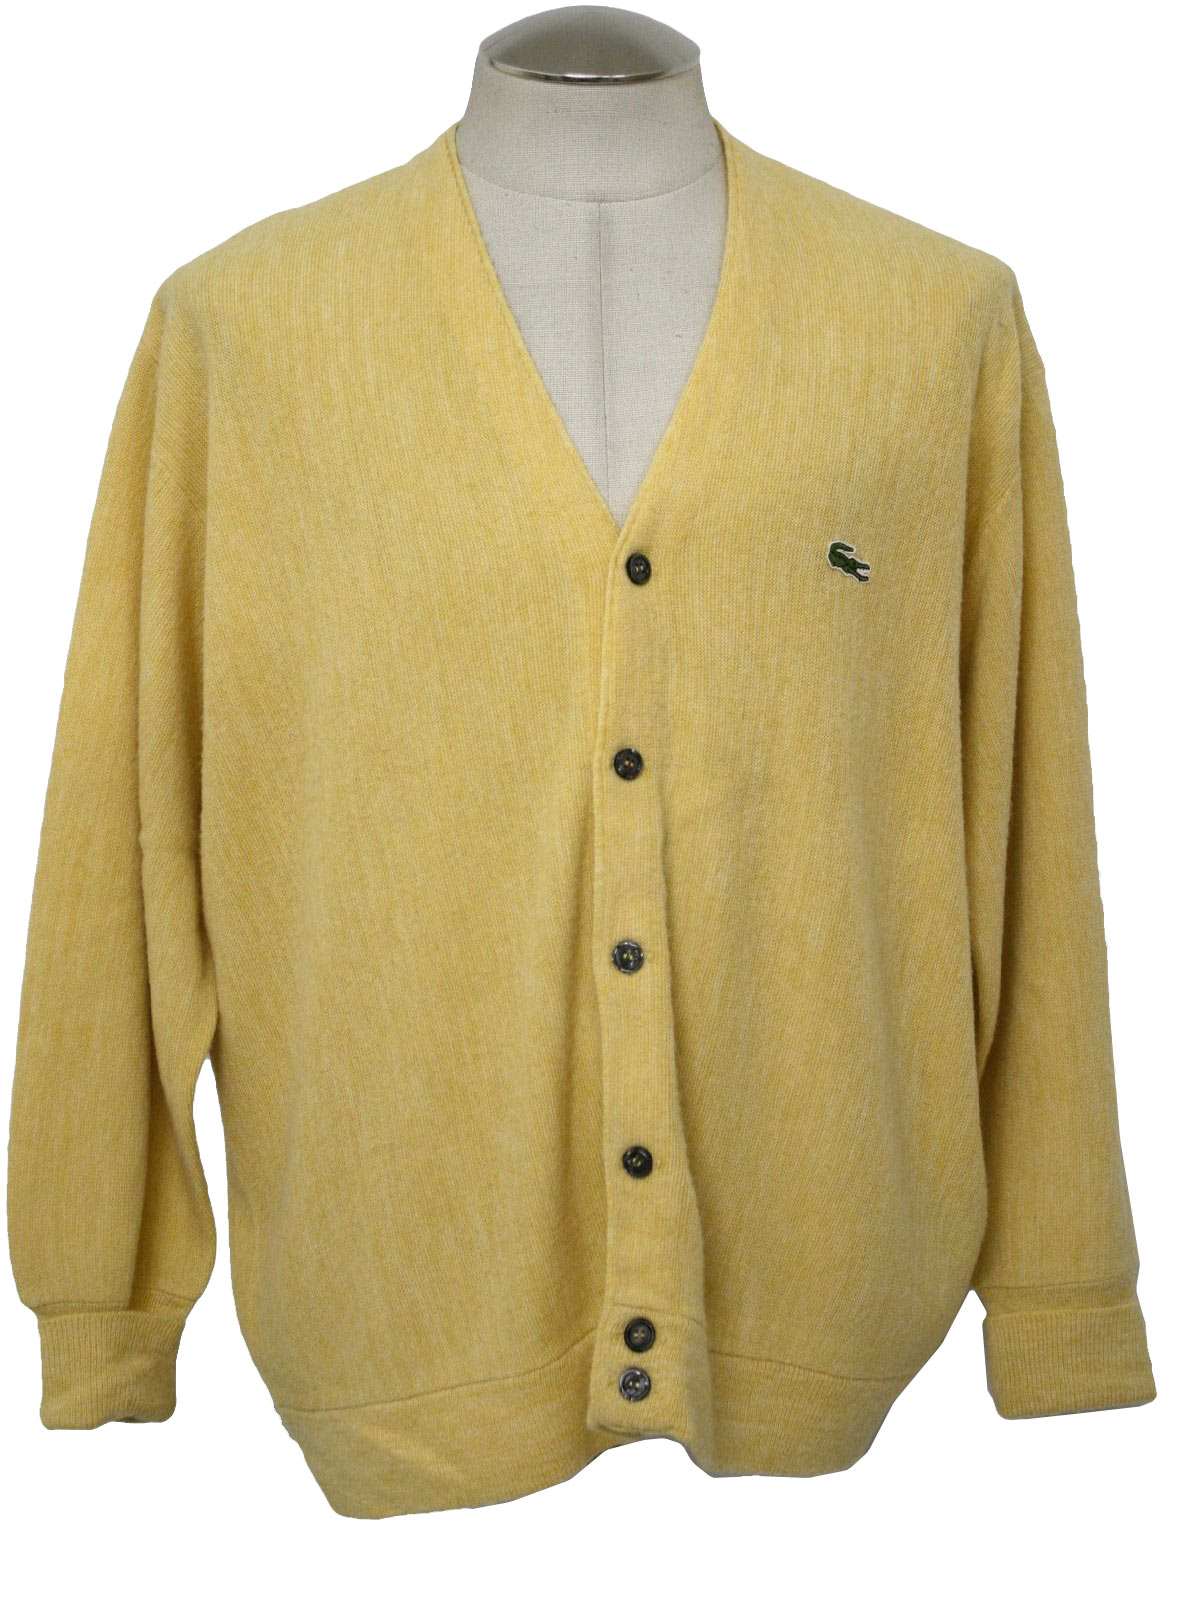 Izod 1970s Vintage Caridgan Sweater: 70s -Izod- Mens blended cream and ...